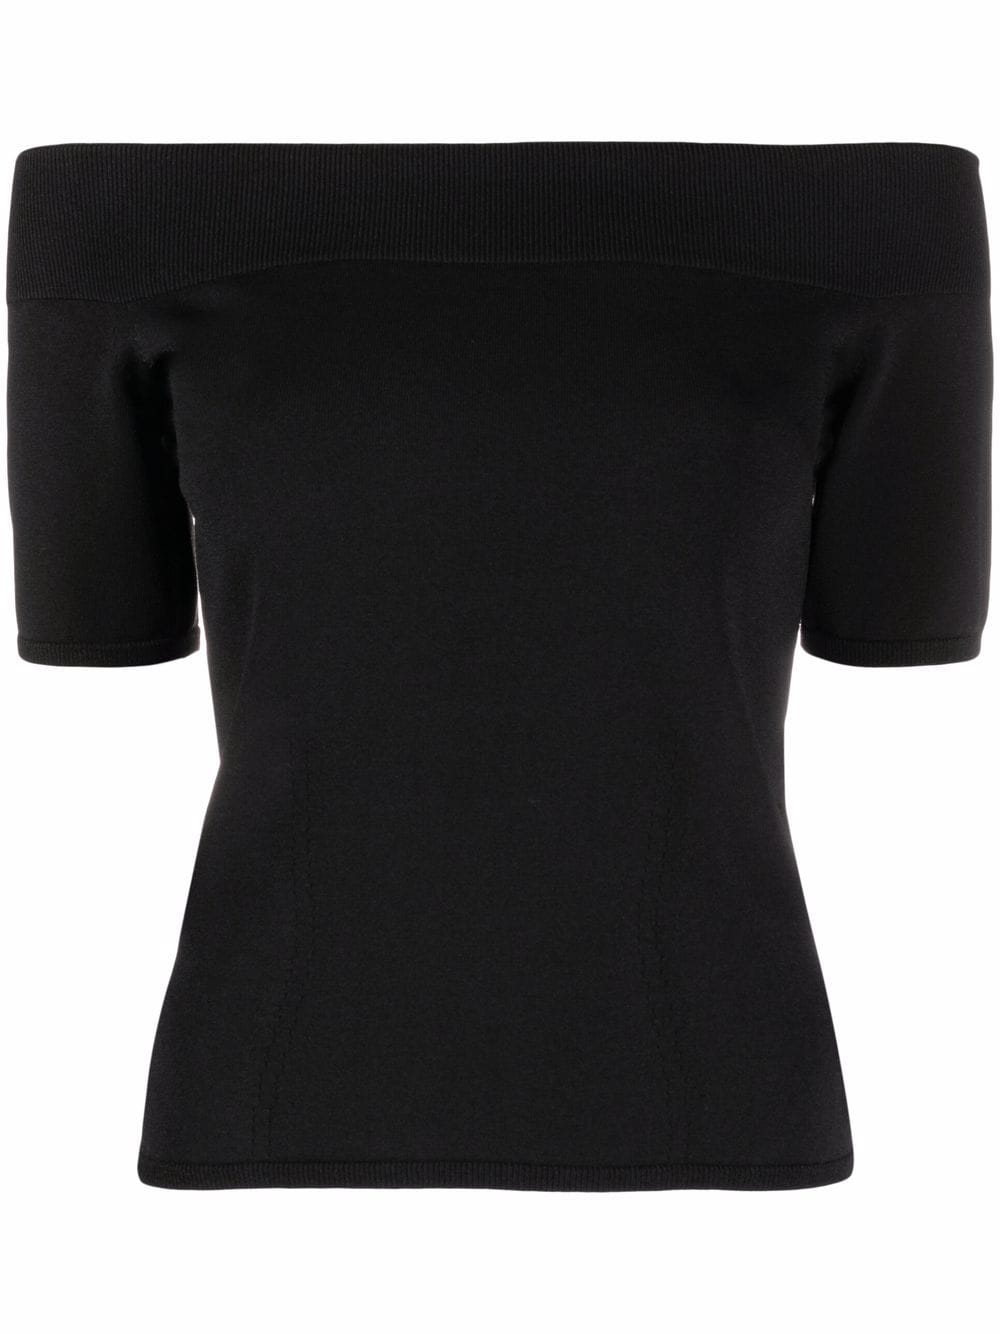 ALEXANDER MCQUEEN Stunning Off-Shoulder Black Knit Top for Women